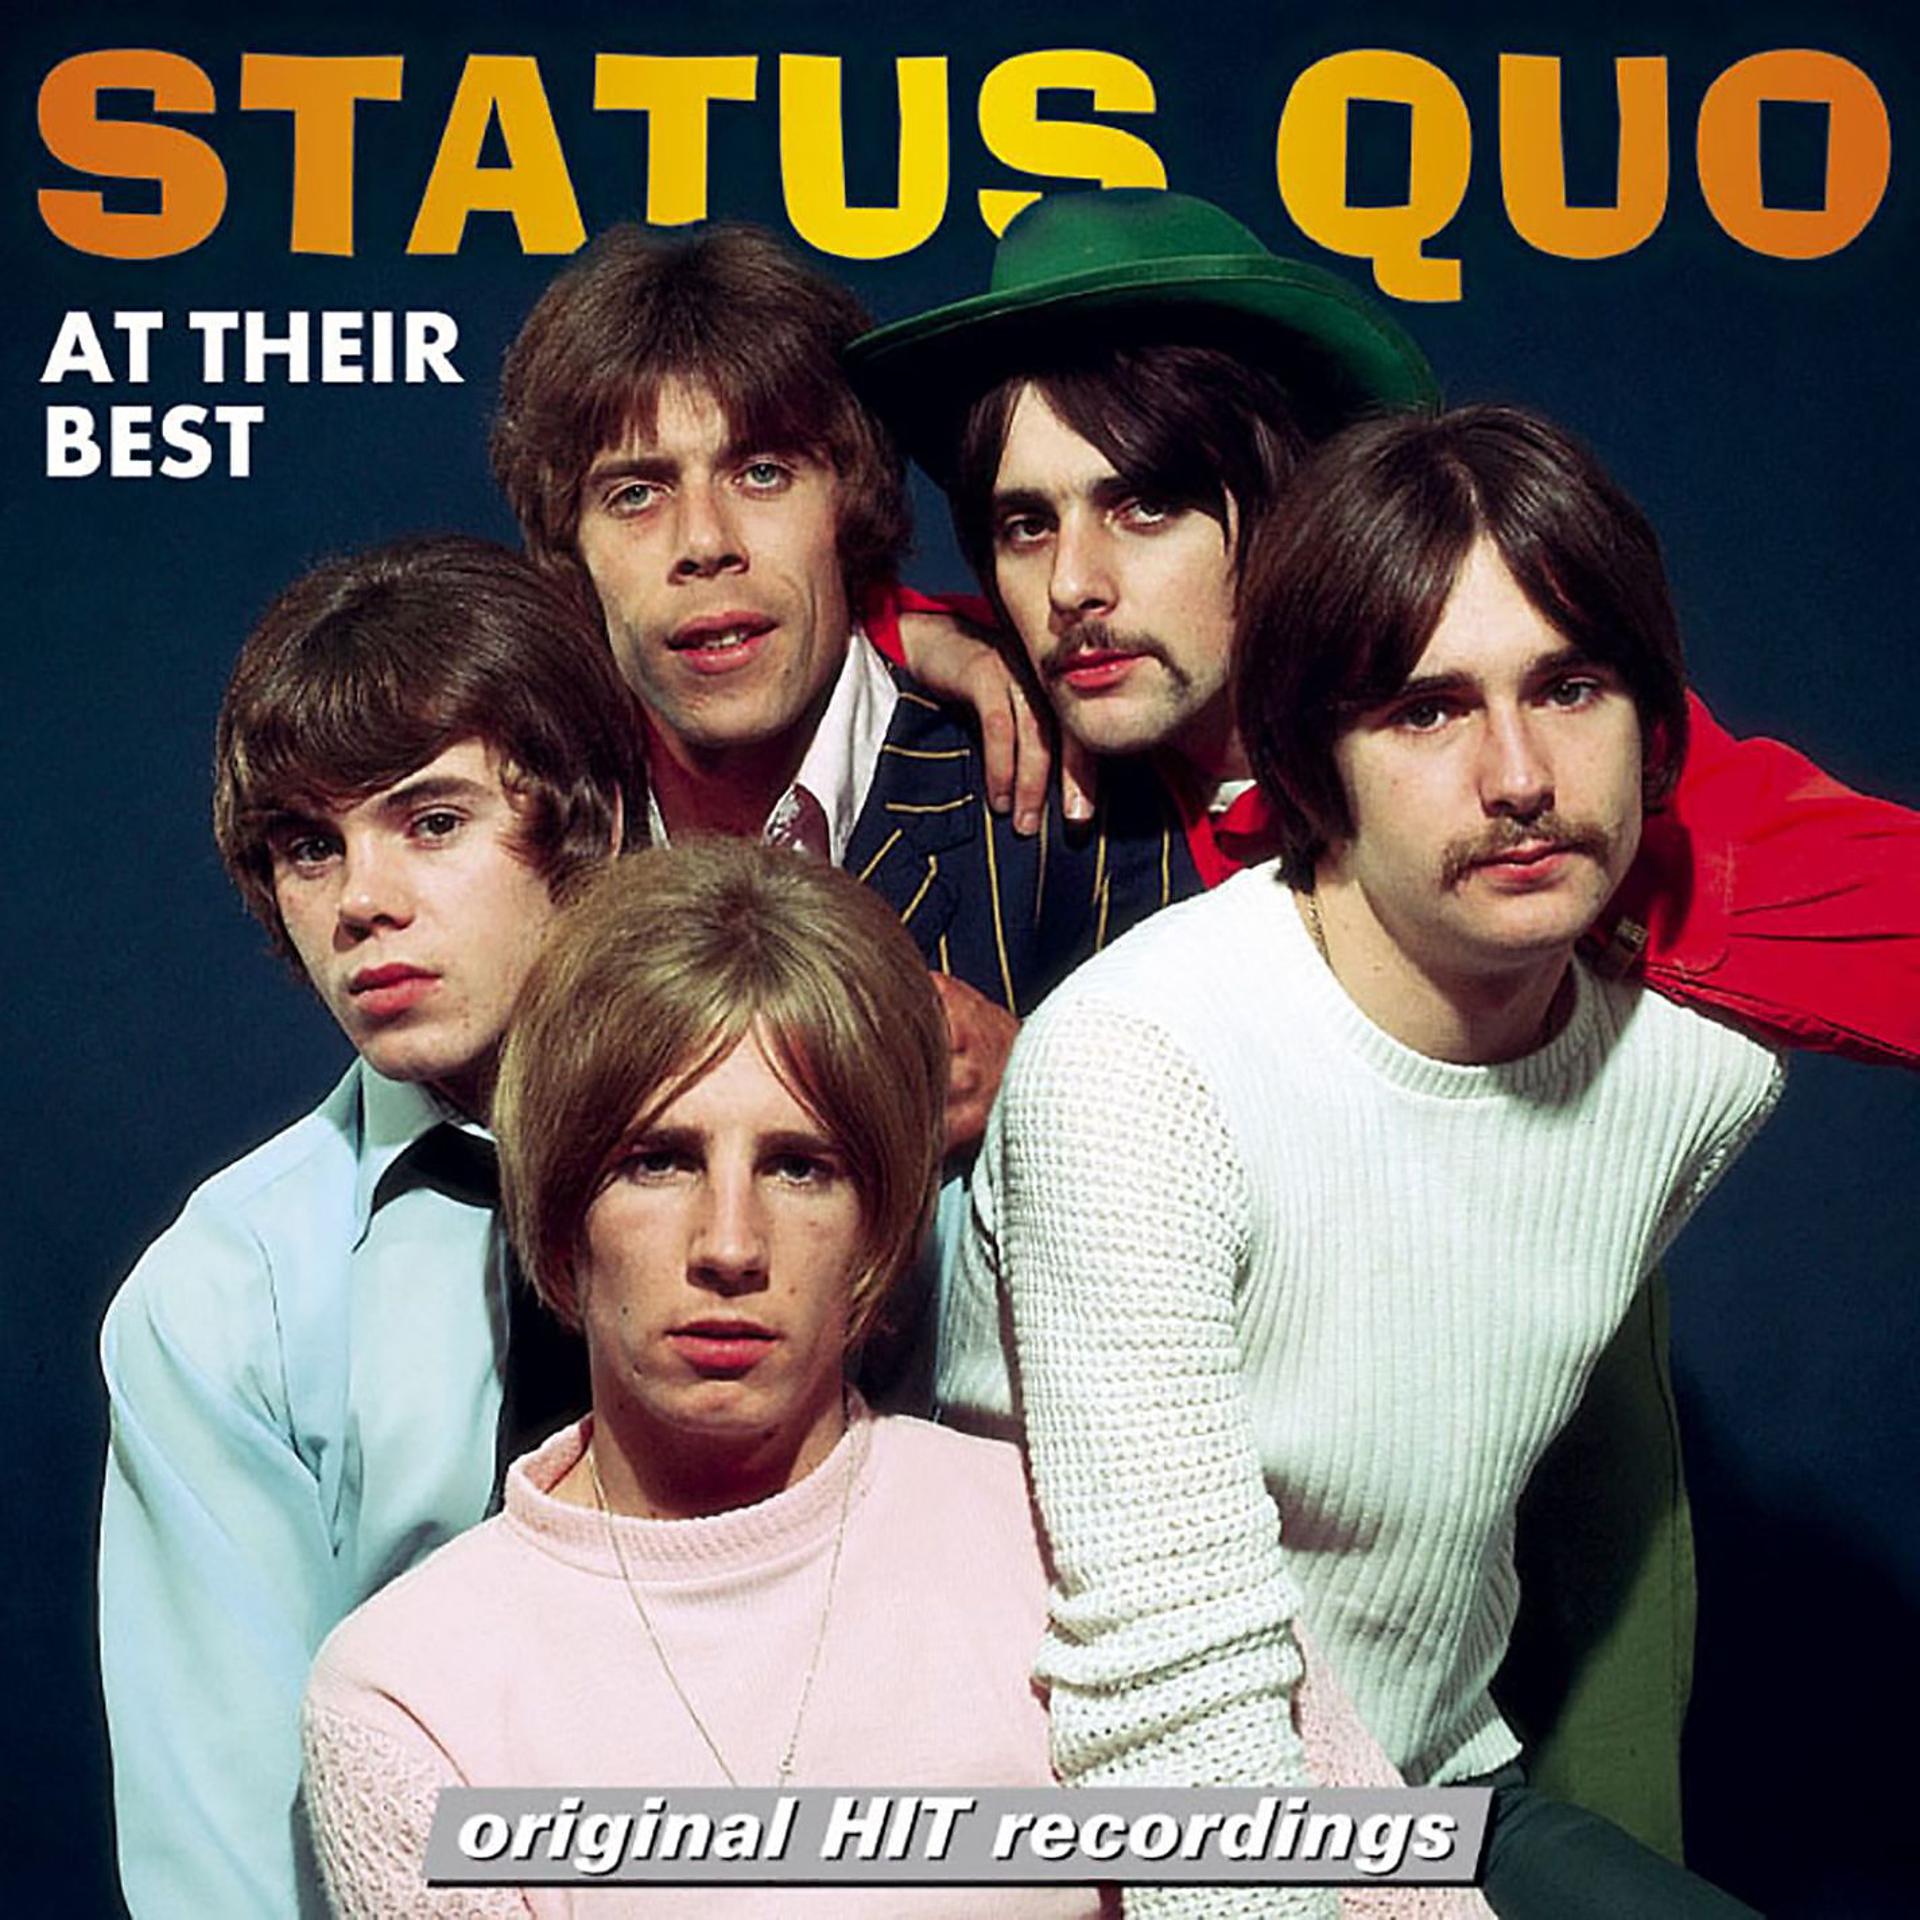 Группа статус песни. Группа status Quo. Status Quo фото группы. Группа status Quo альбомы. Статус кво это.